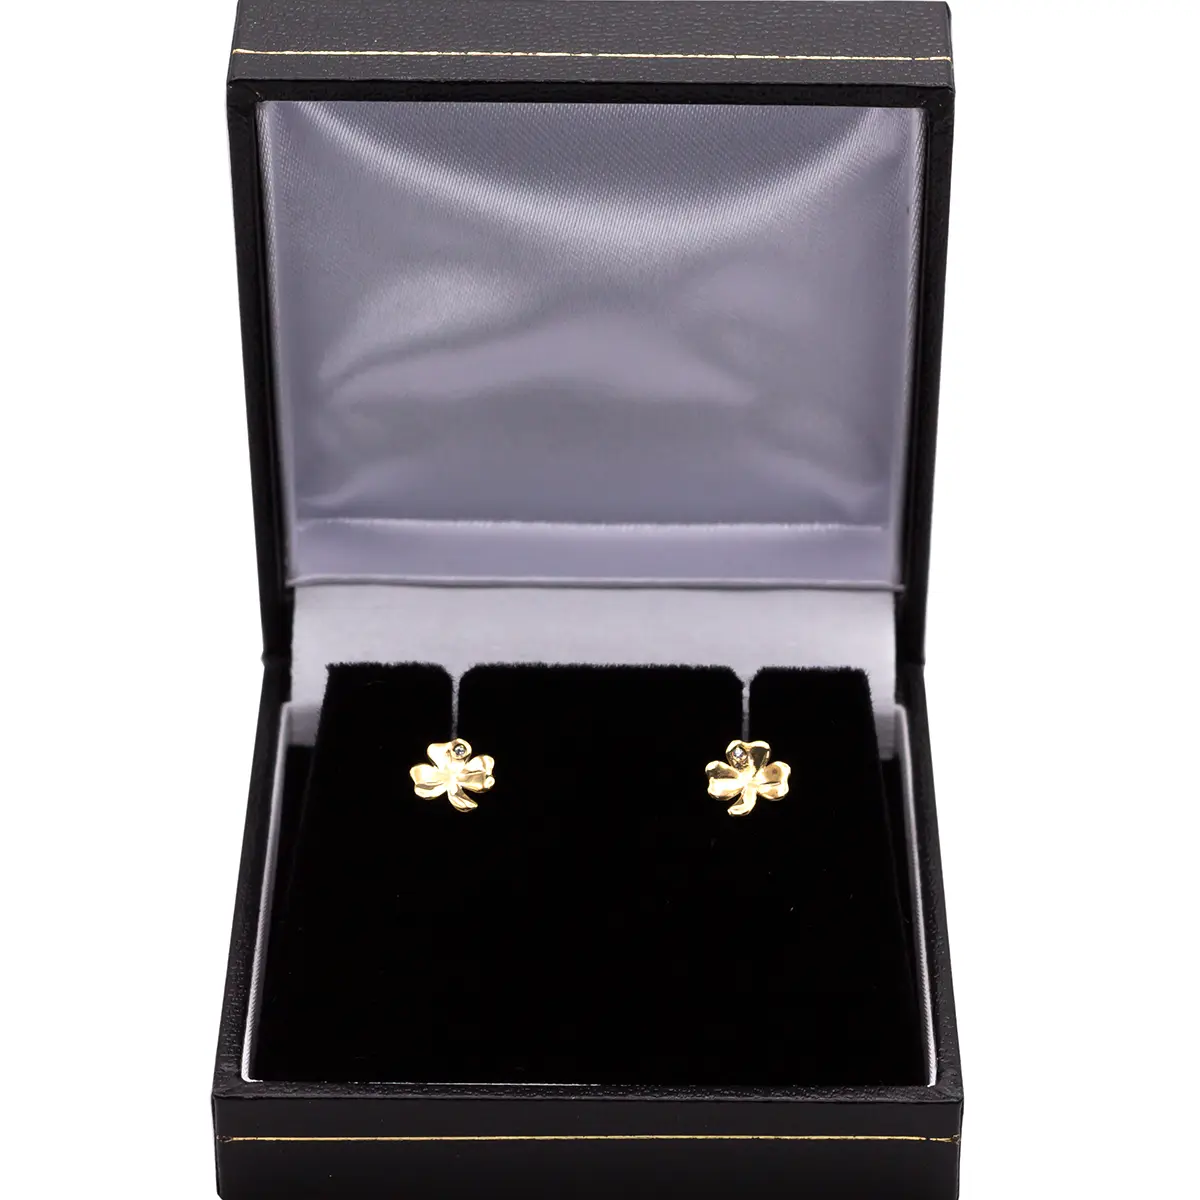 10k Gold Shamrock Stud Earrings Set With Cubic Zirconia Stones 4...